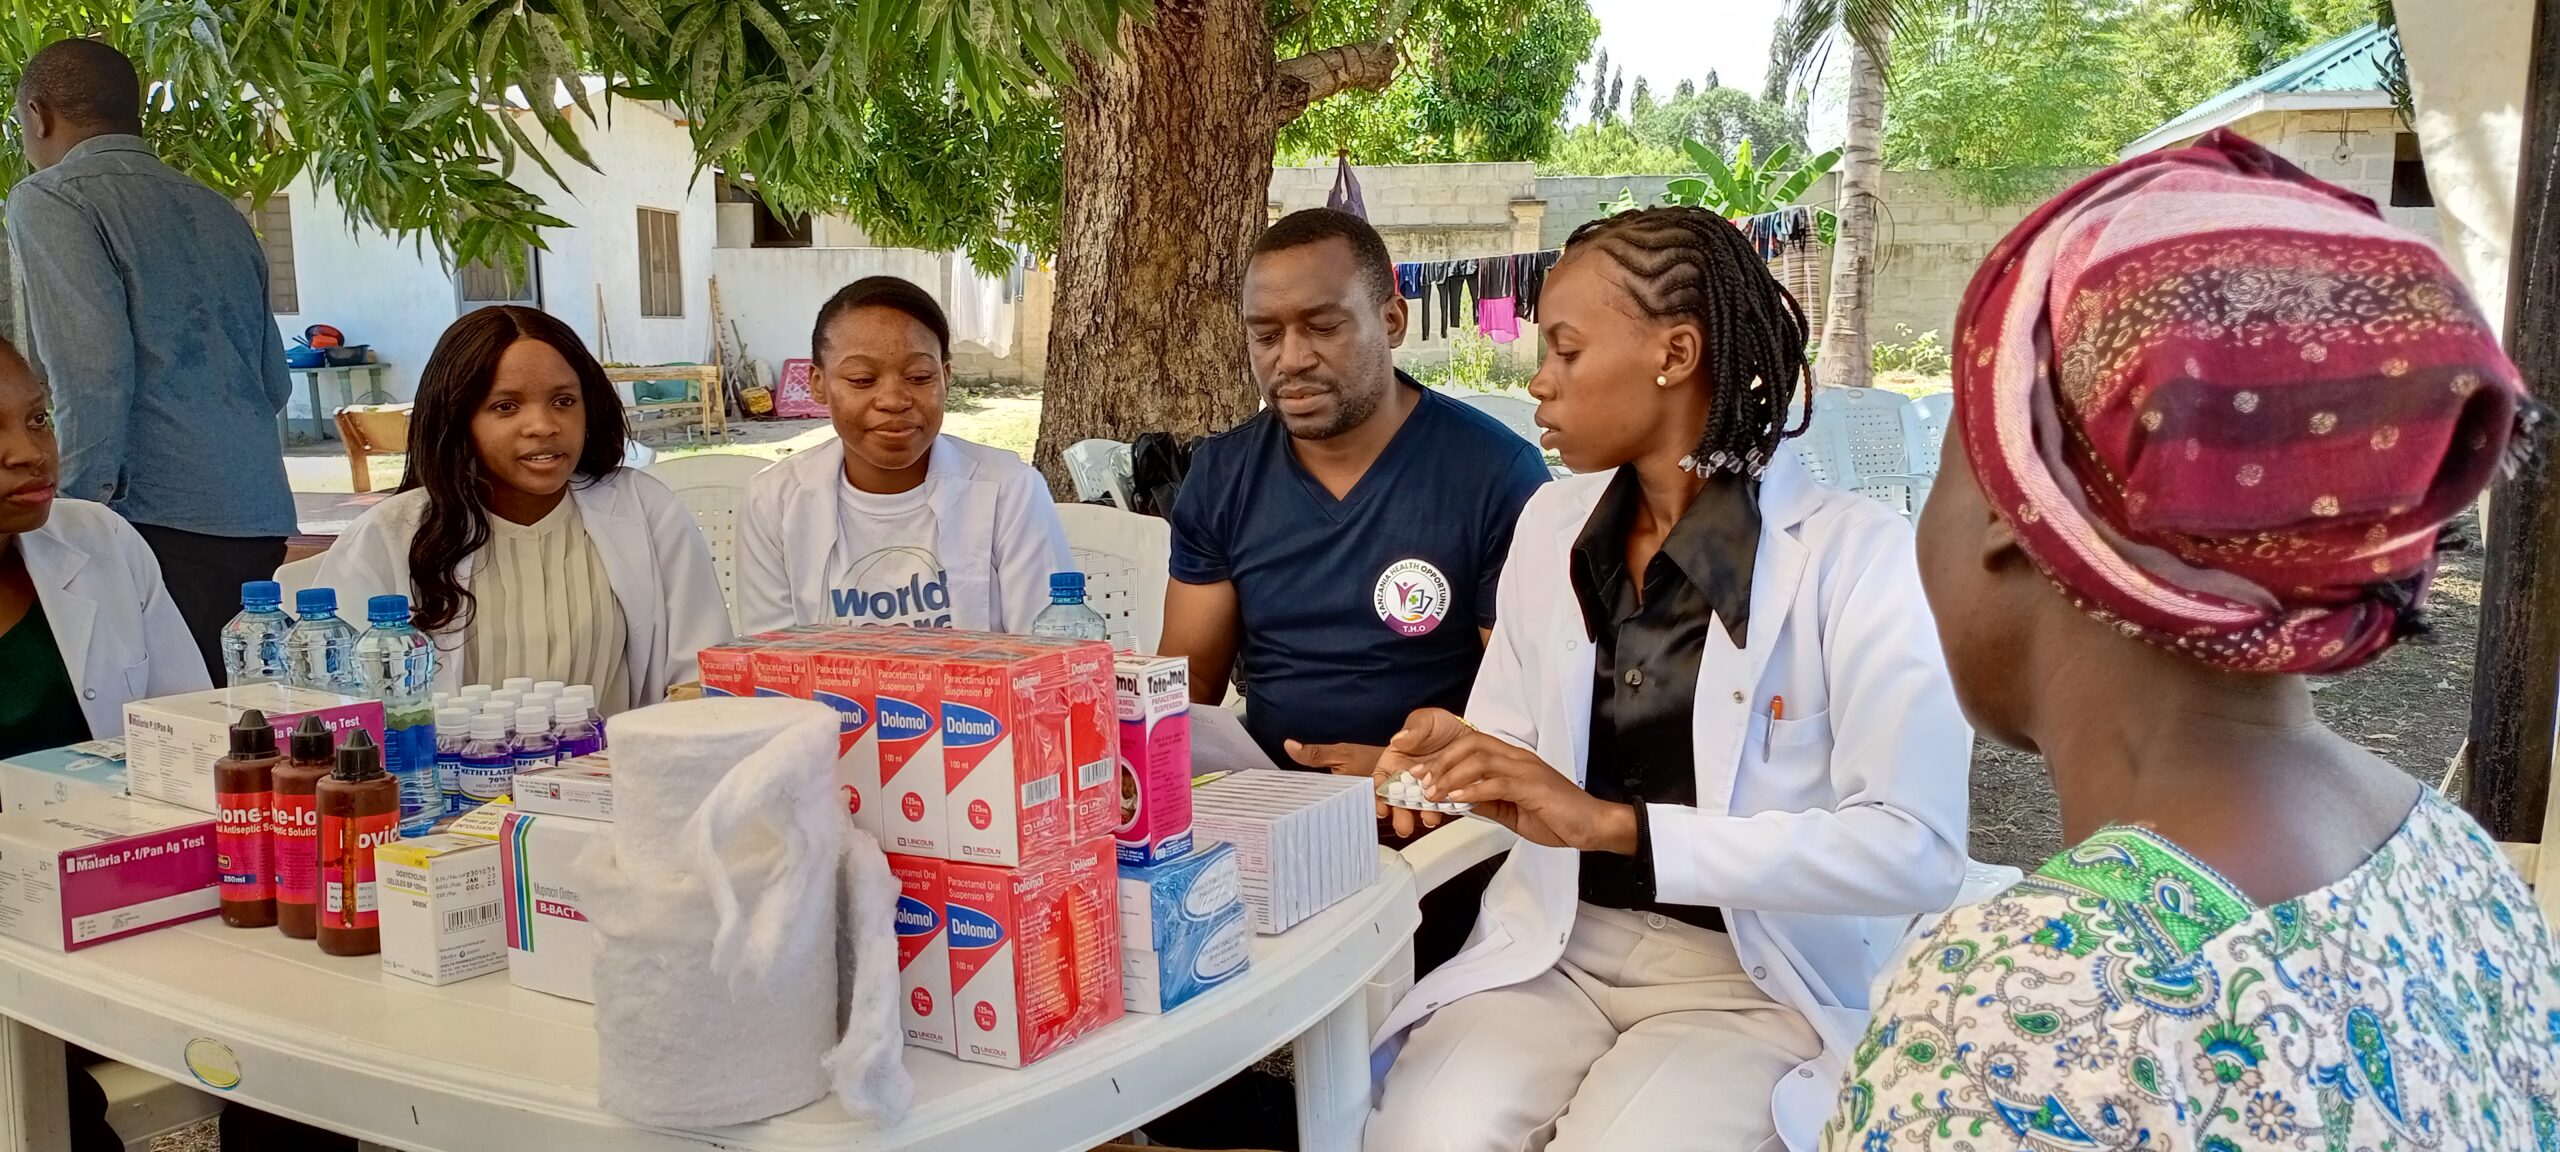 tanzania health volunteer opportunities outreach program